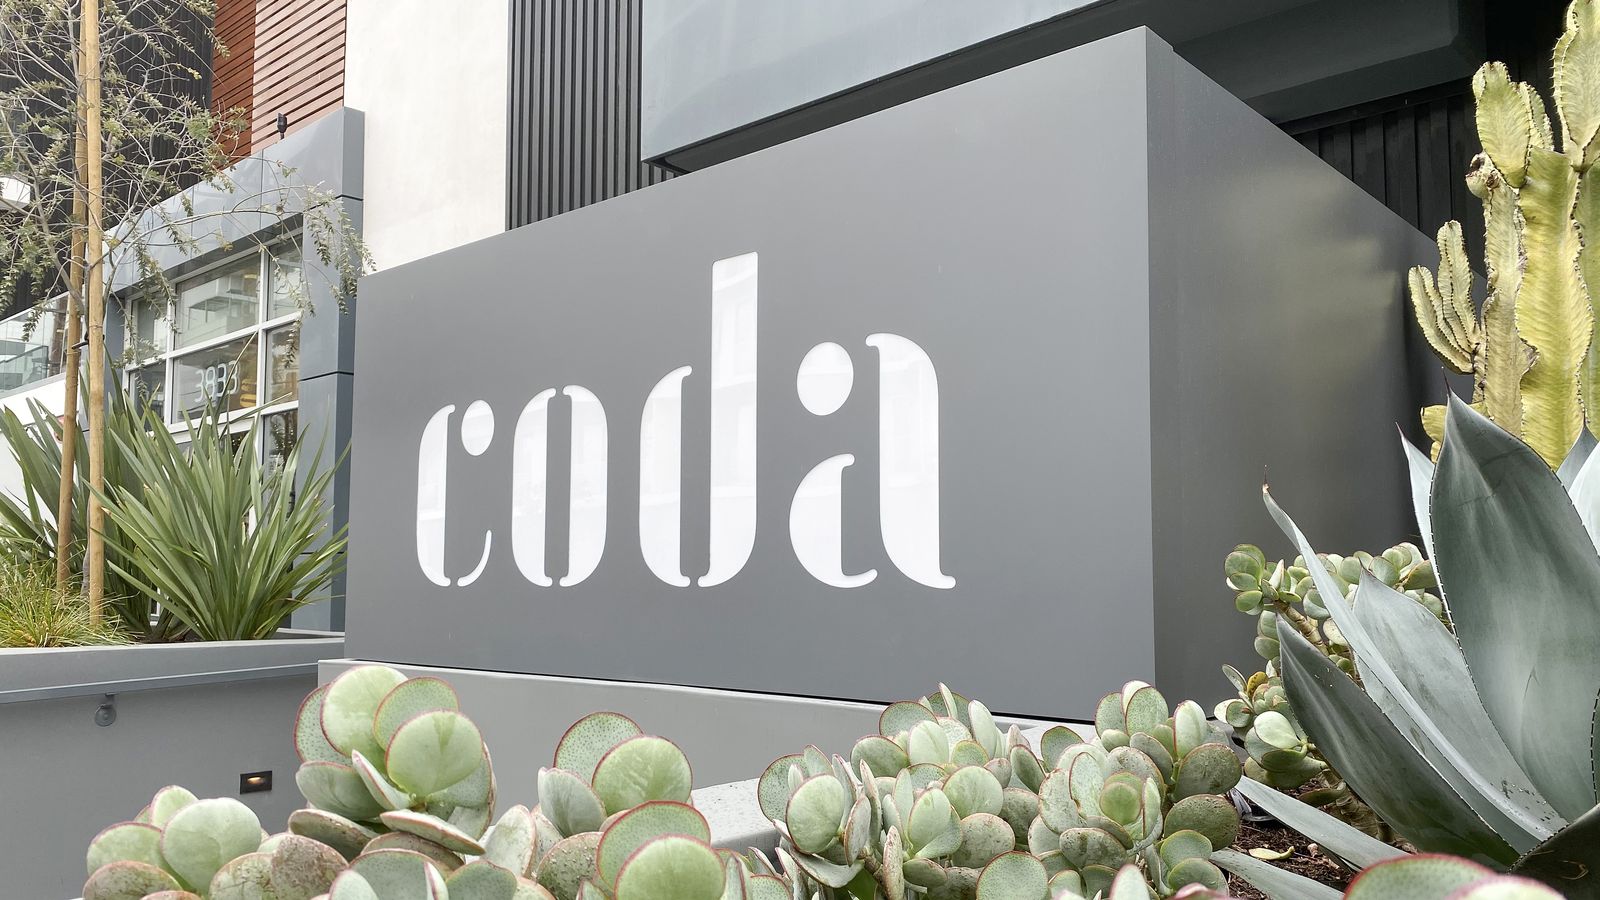 Coda light up sign